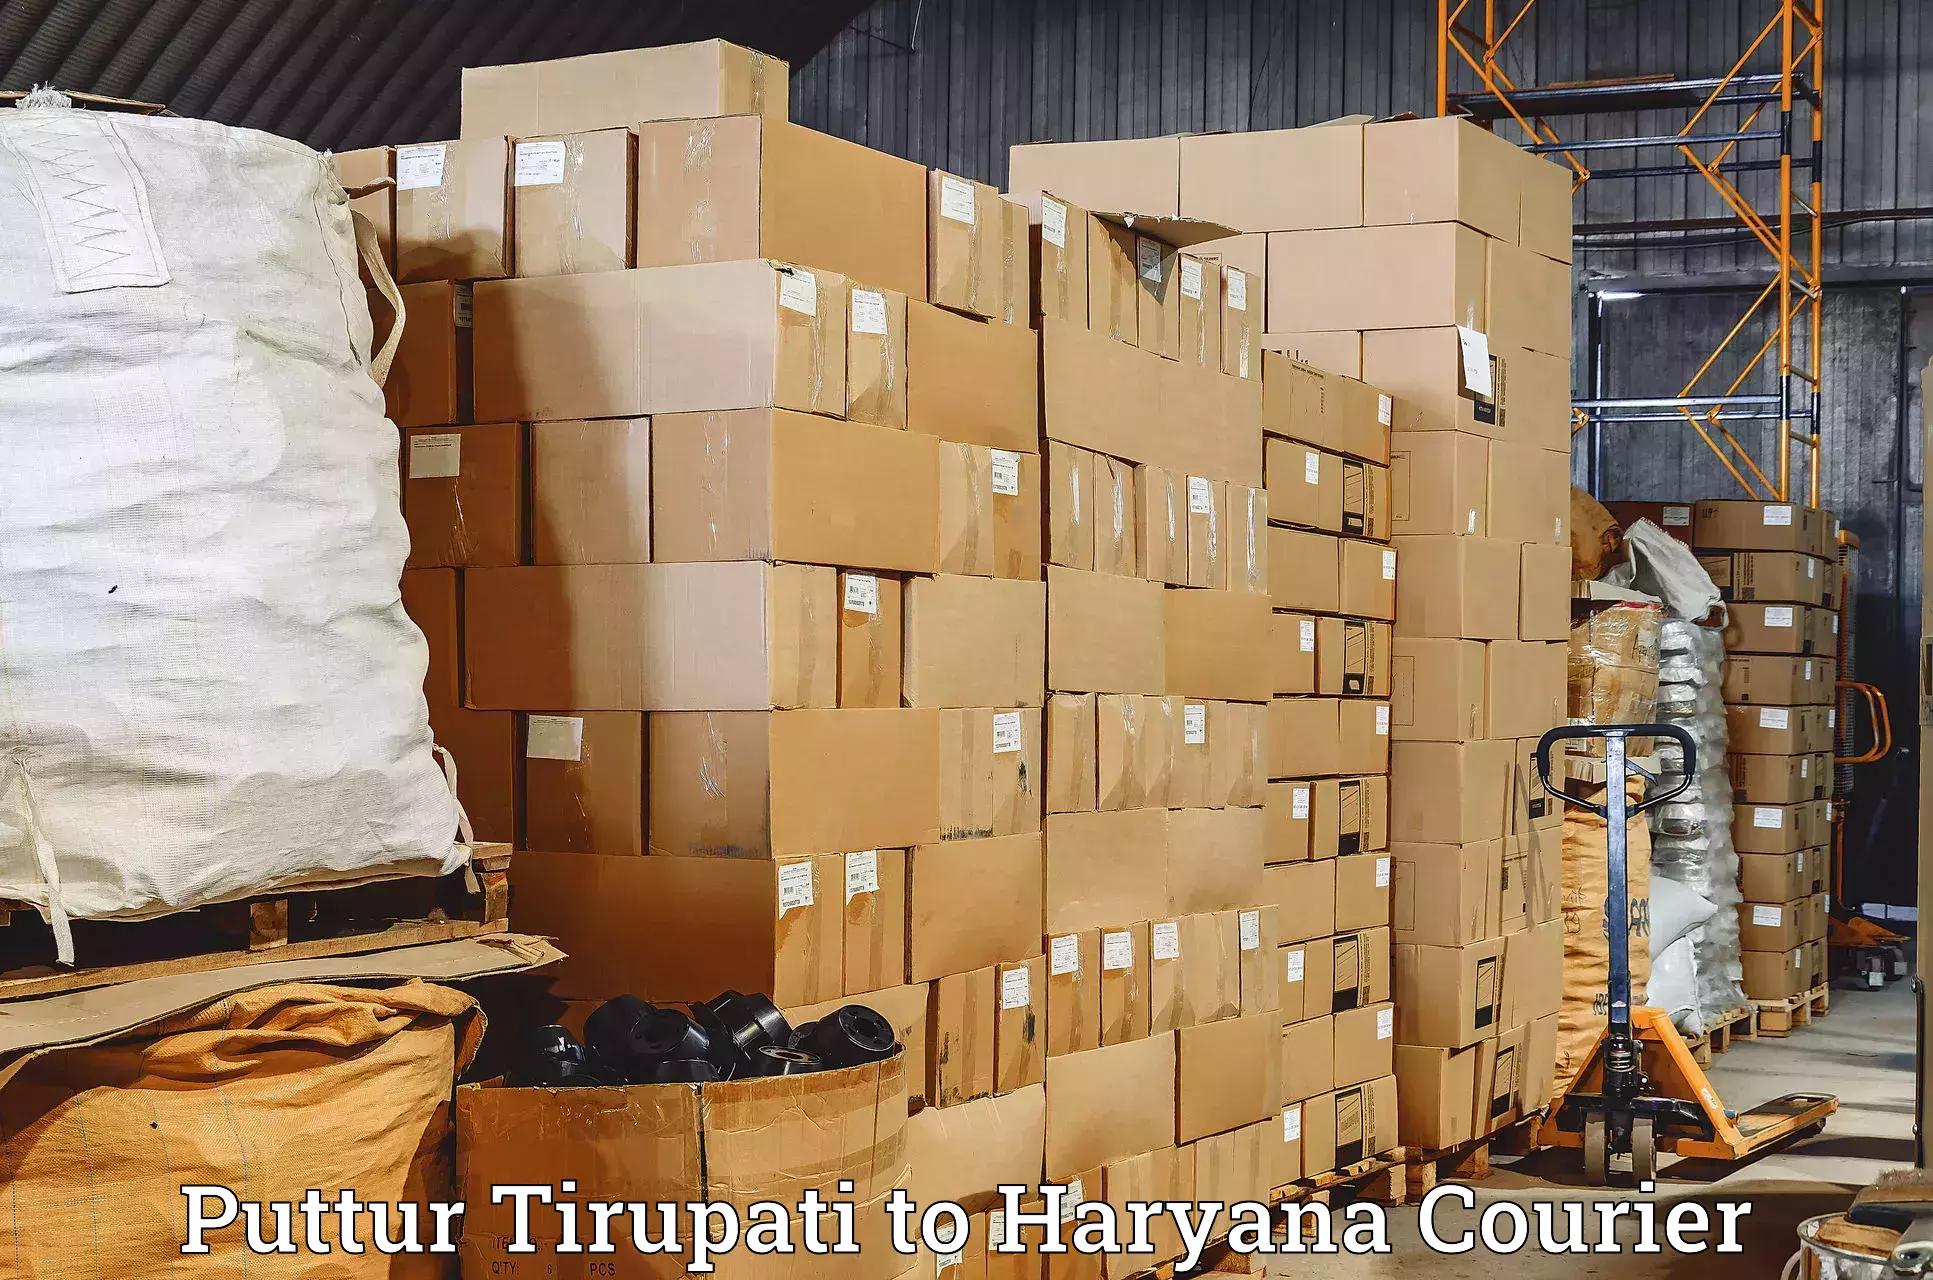 Express delivery network Puttur Tirupati to Barwala